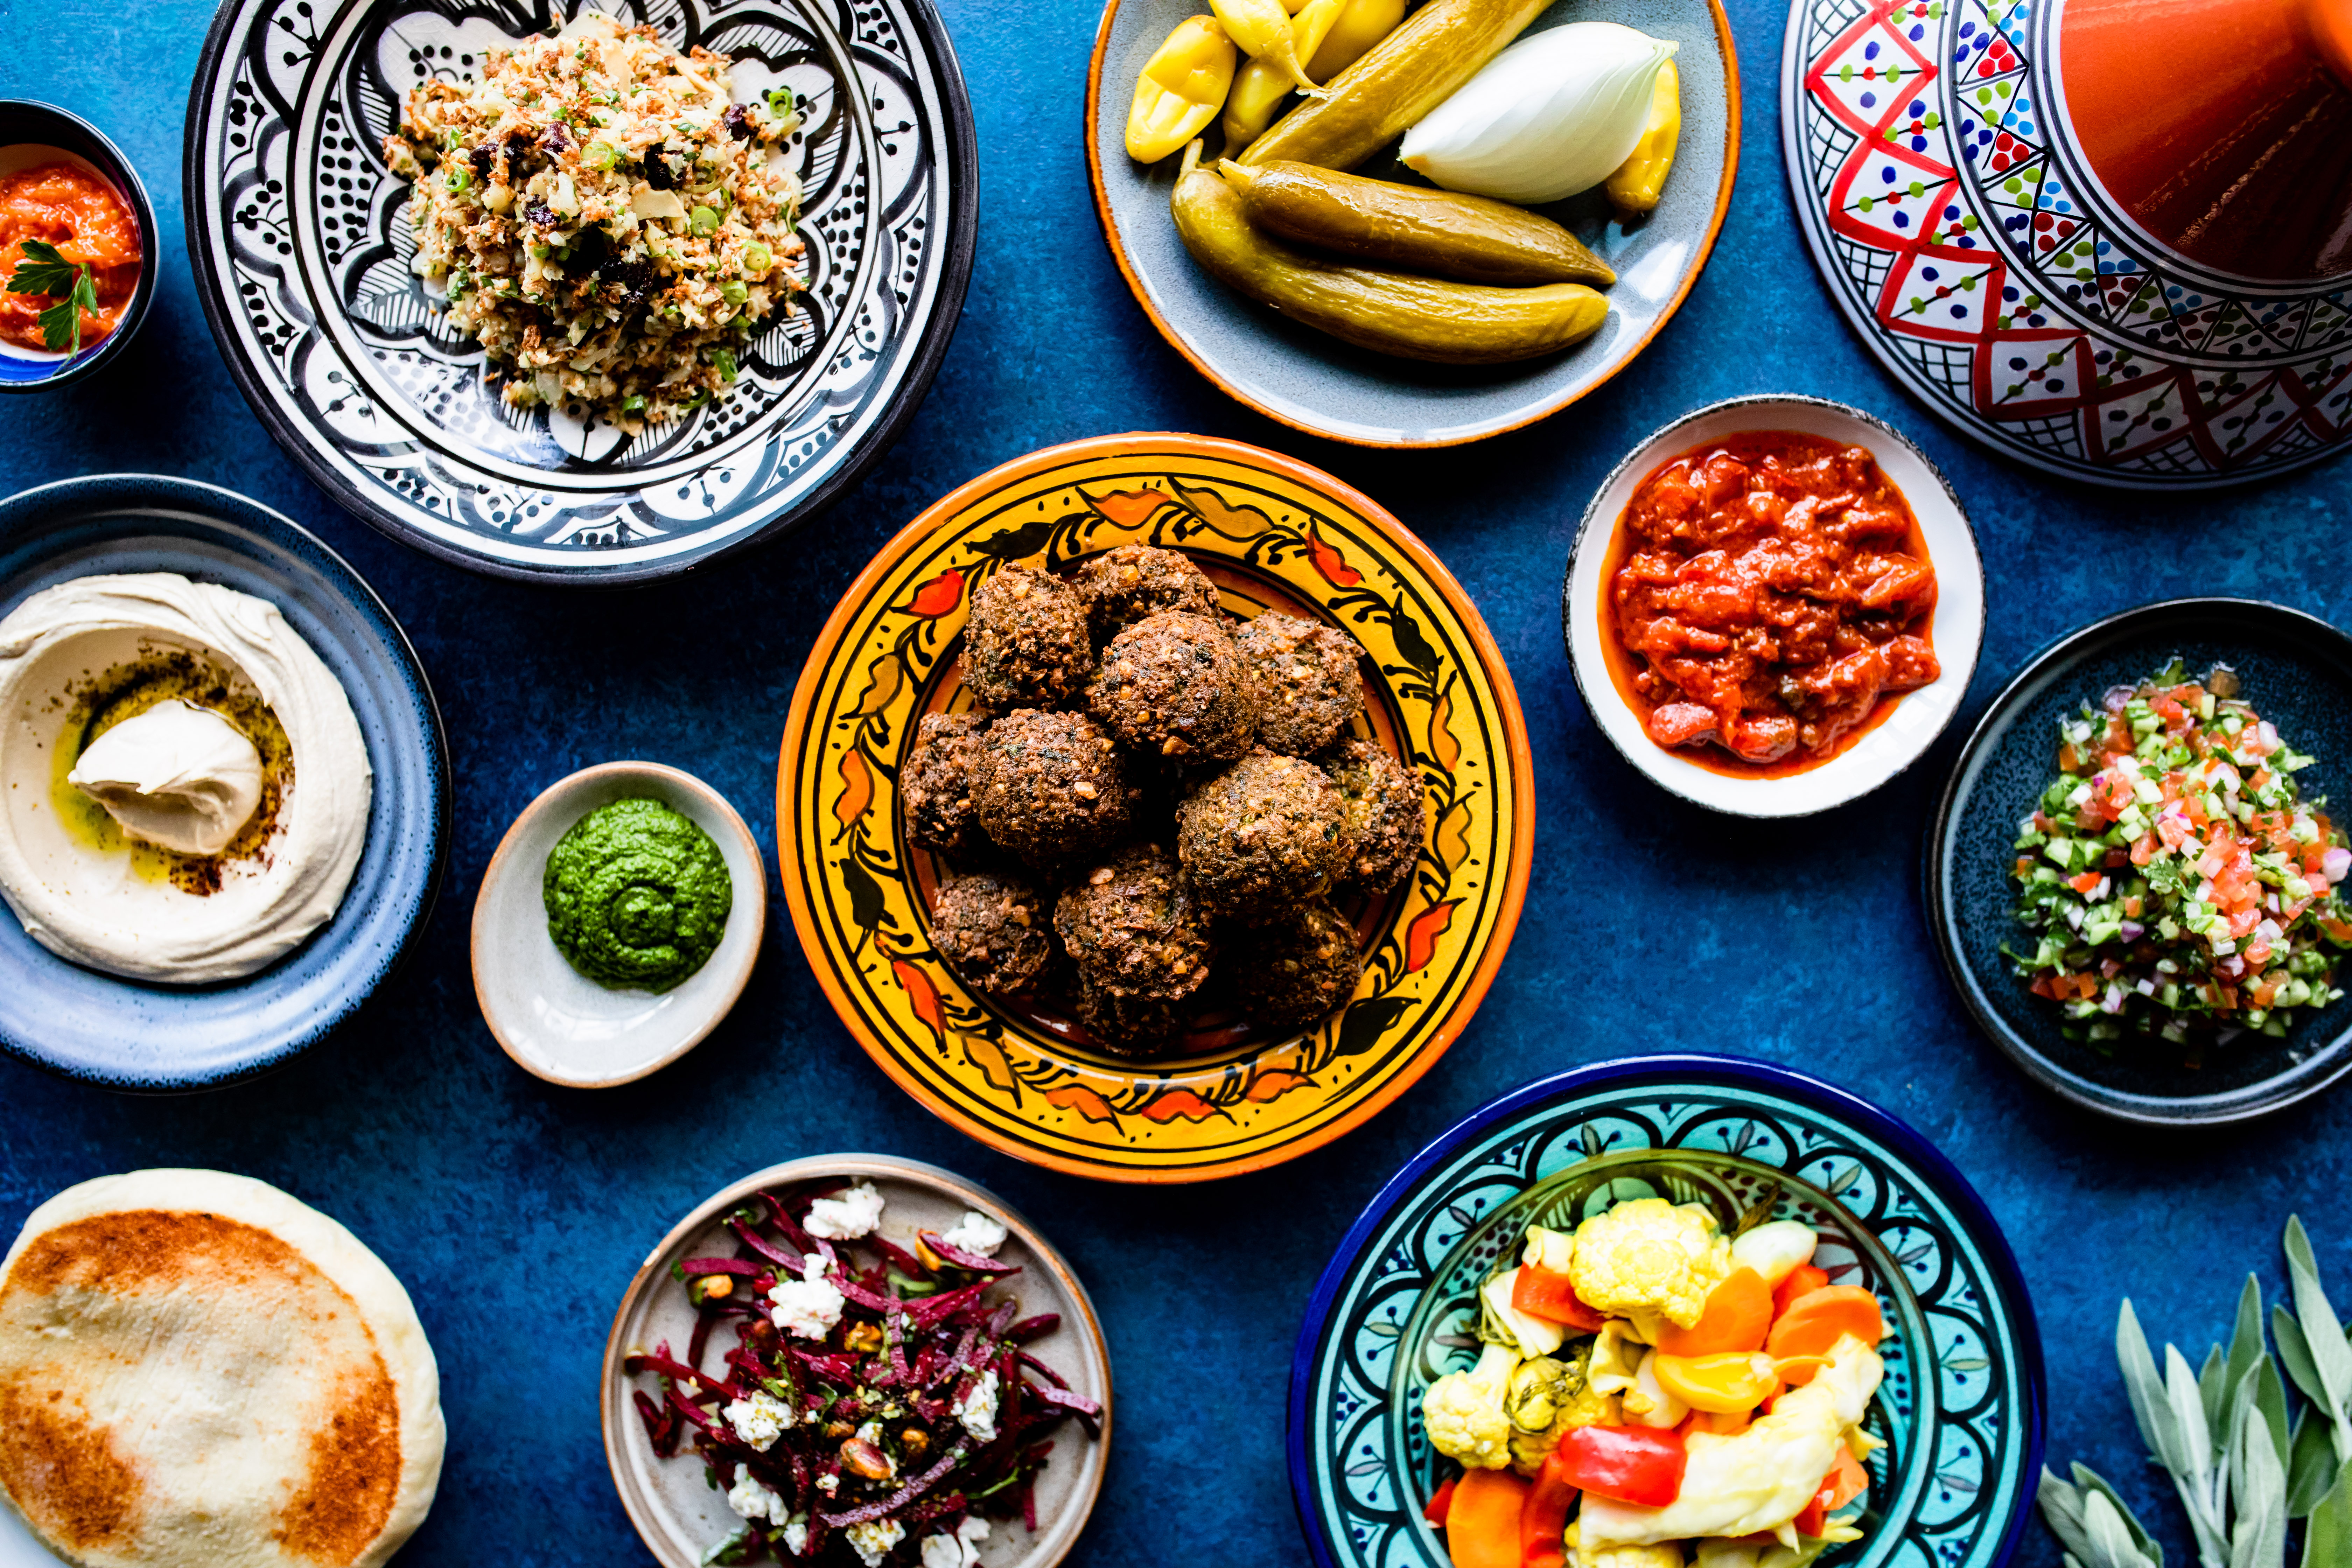 Plates of falafel, salatim, hummus, sauces, pita bread, and more at Hamsa.